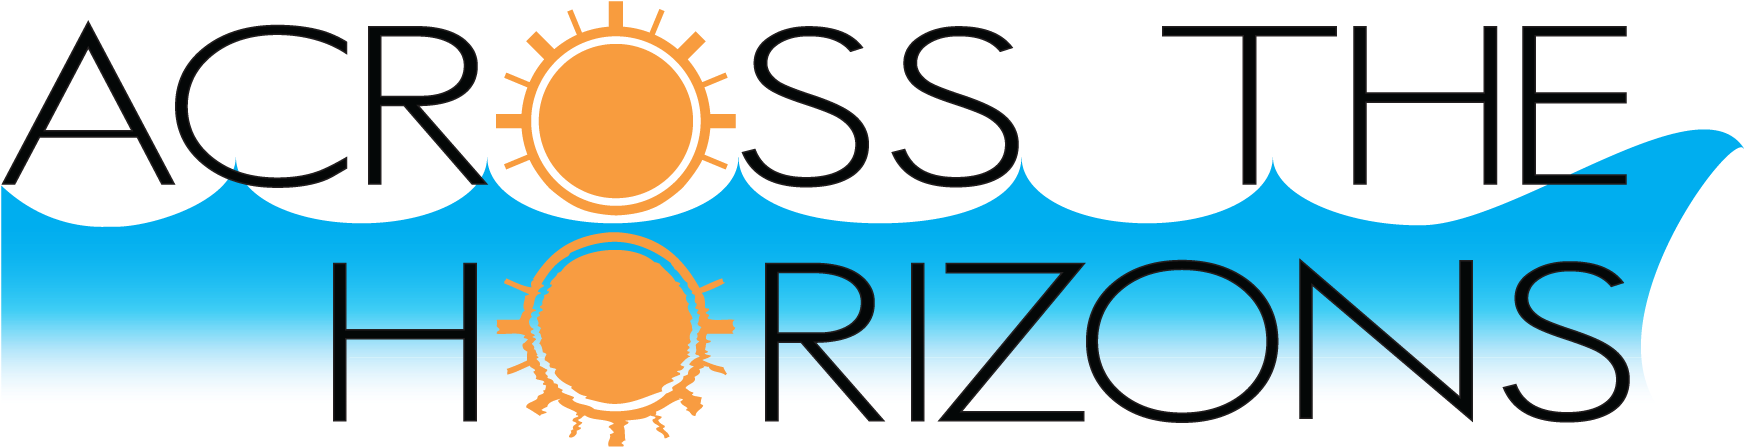 Across The Horizons Logo - Logo (1760x470)